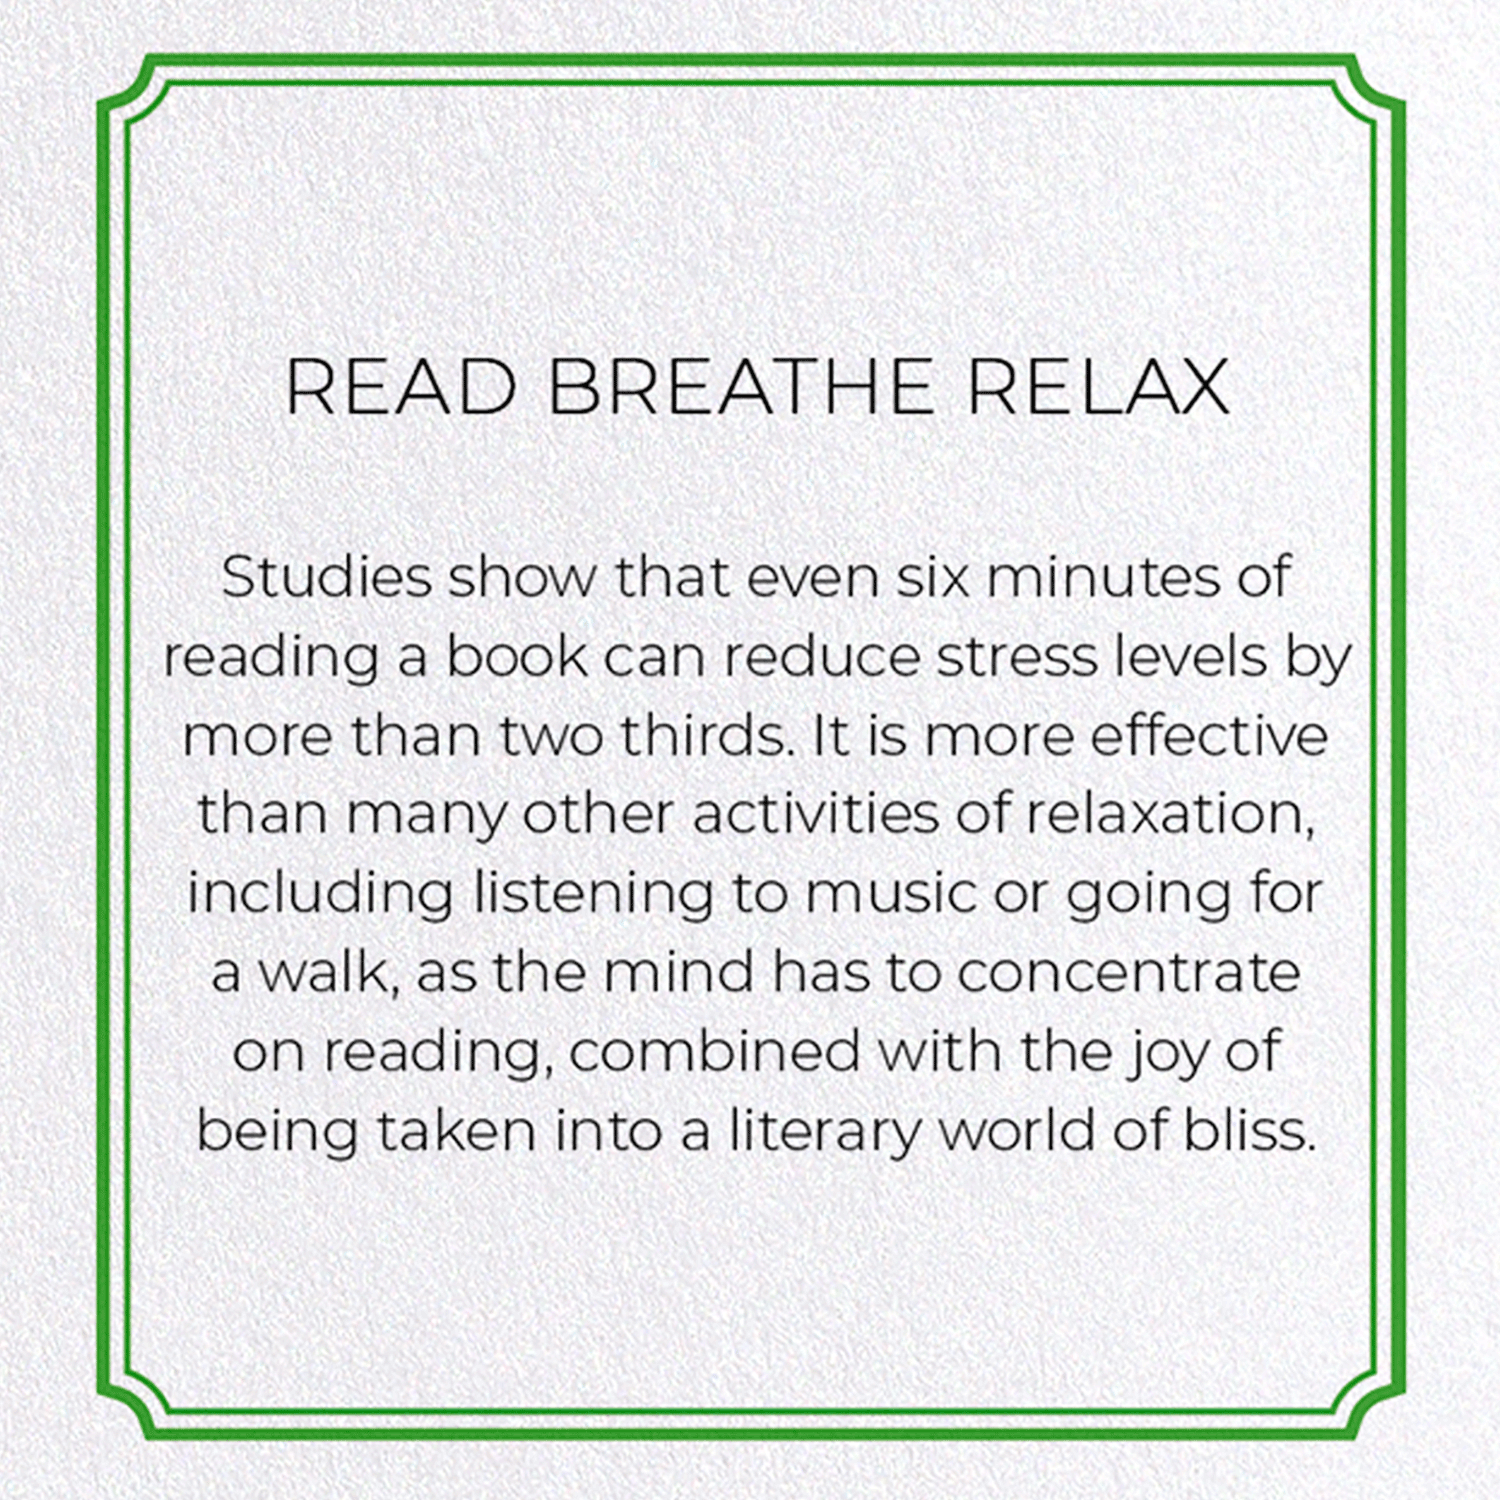 READ BREATHE RELAX